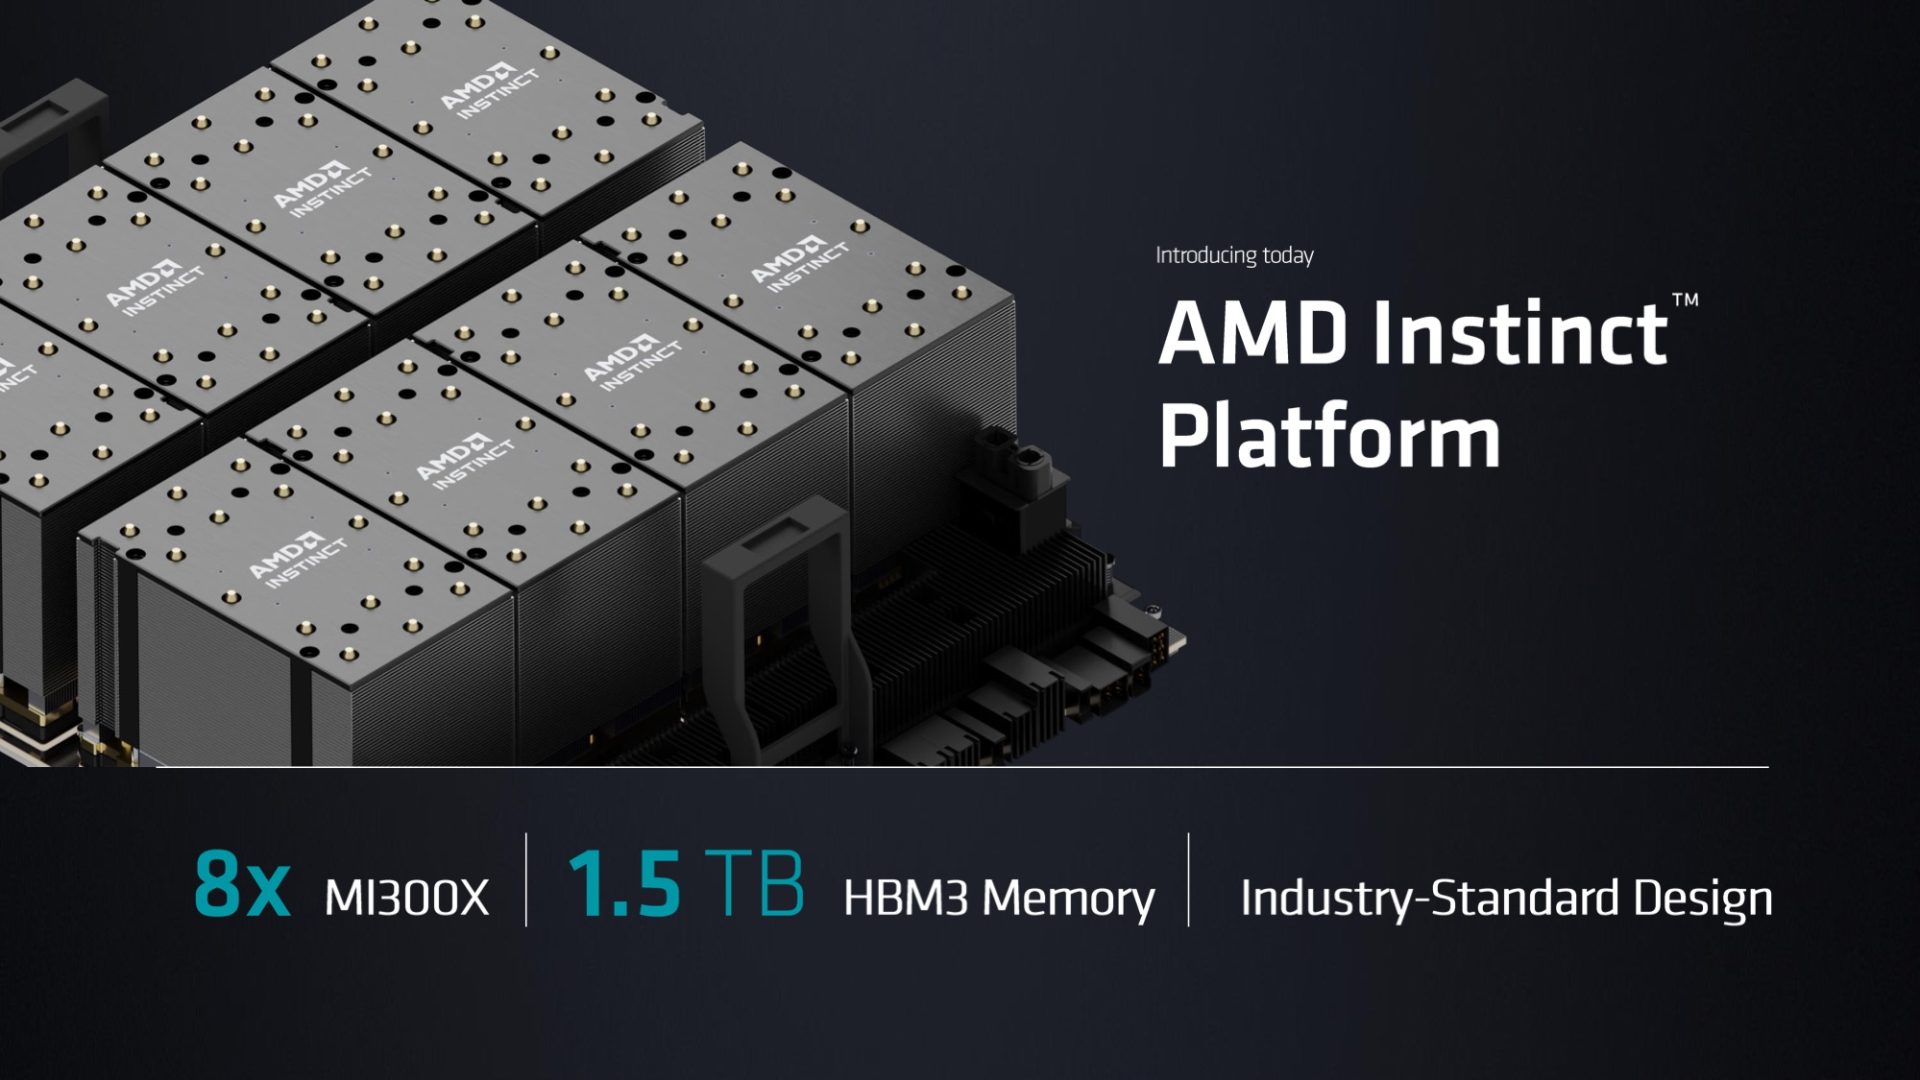 AMD Instinct MI300X